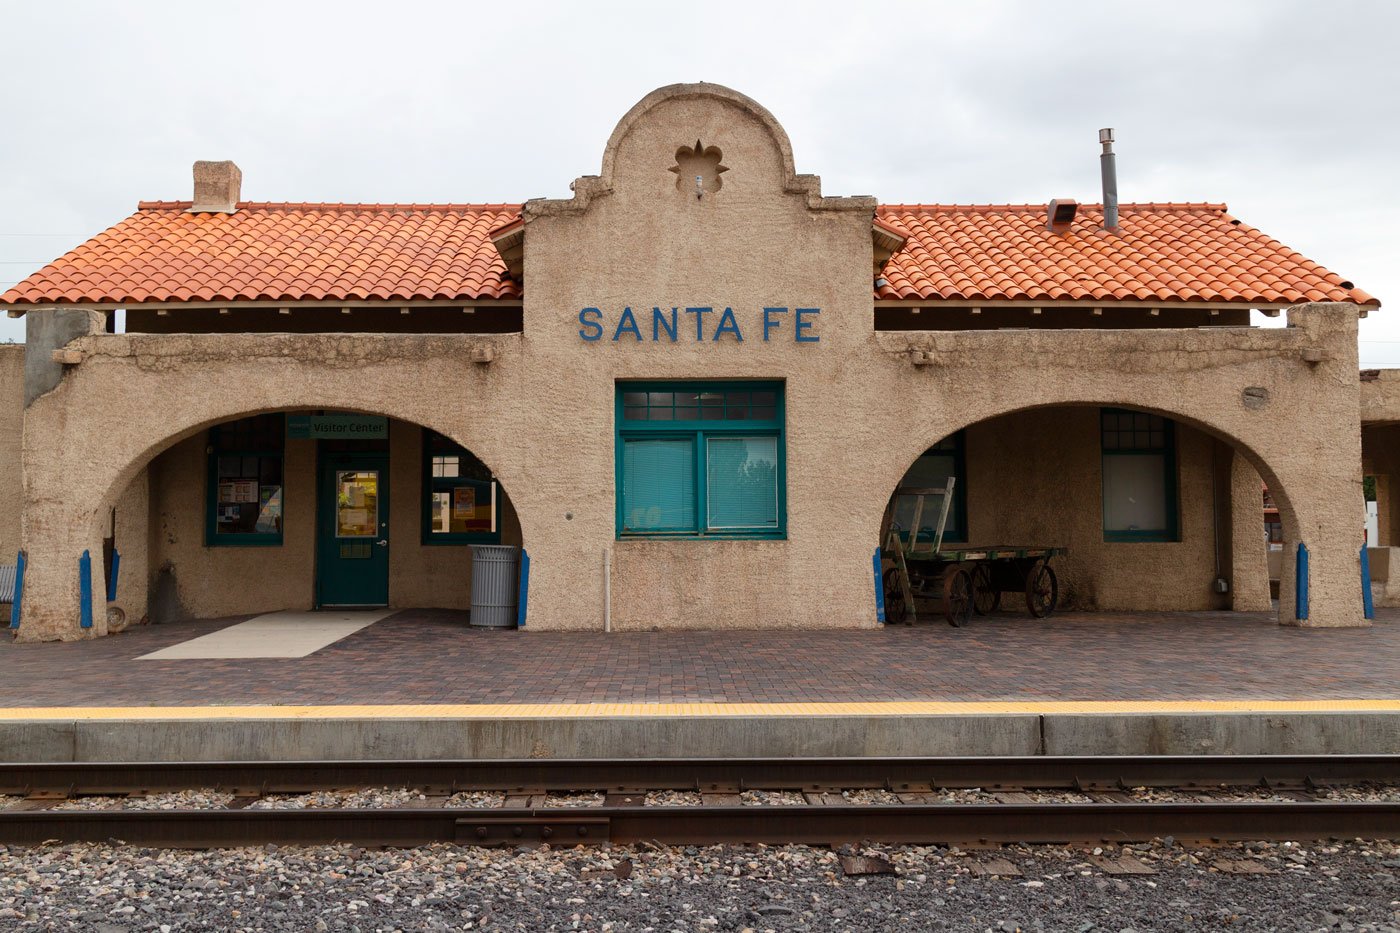 Atchison, Topeka and Santa Fe Railway Depot